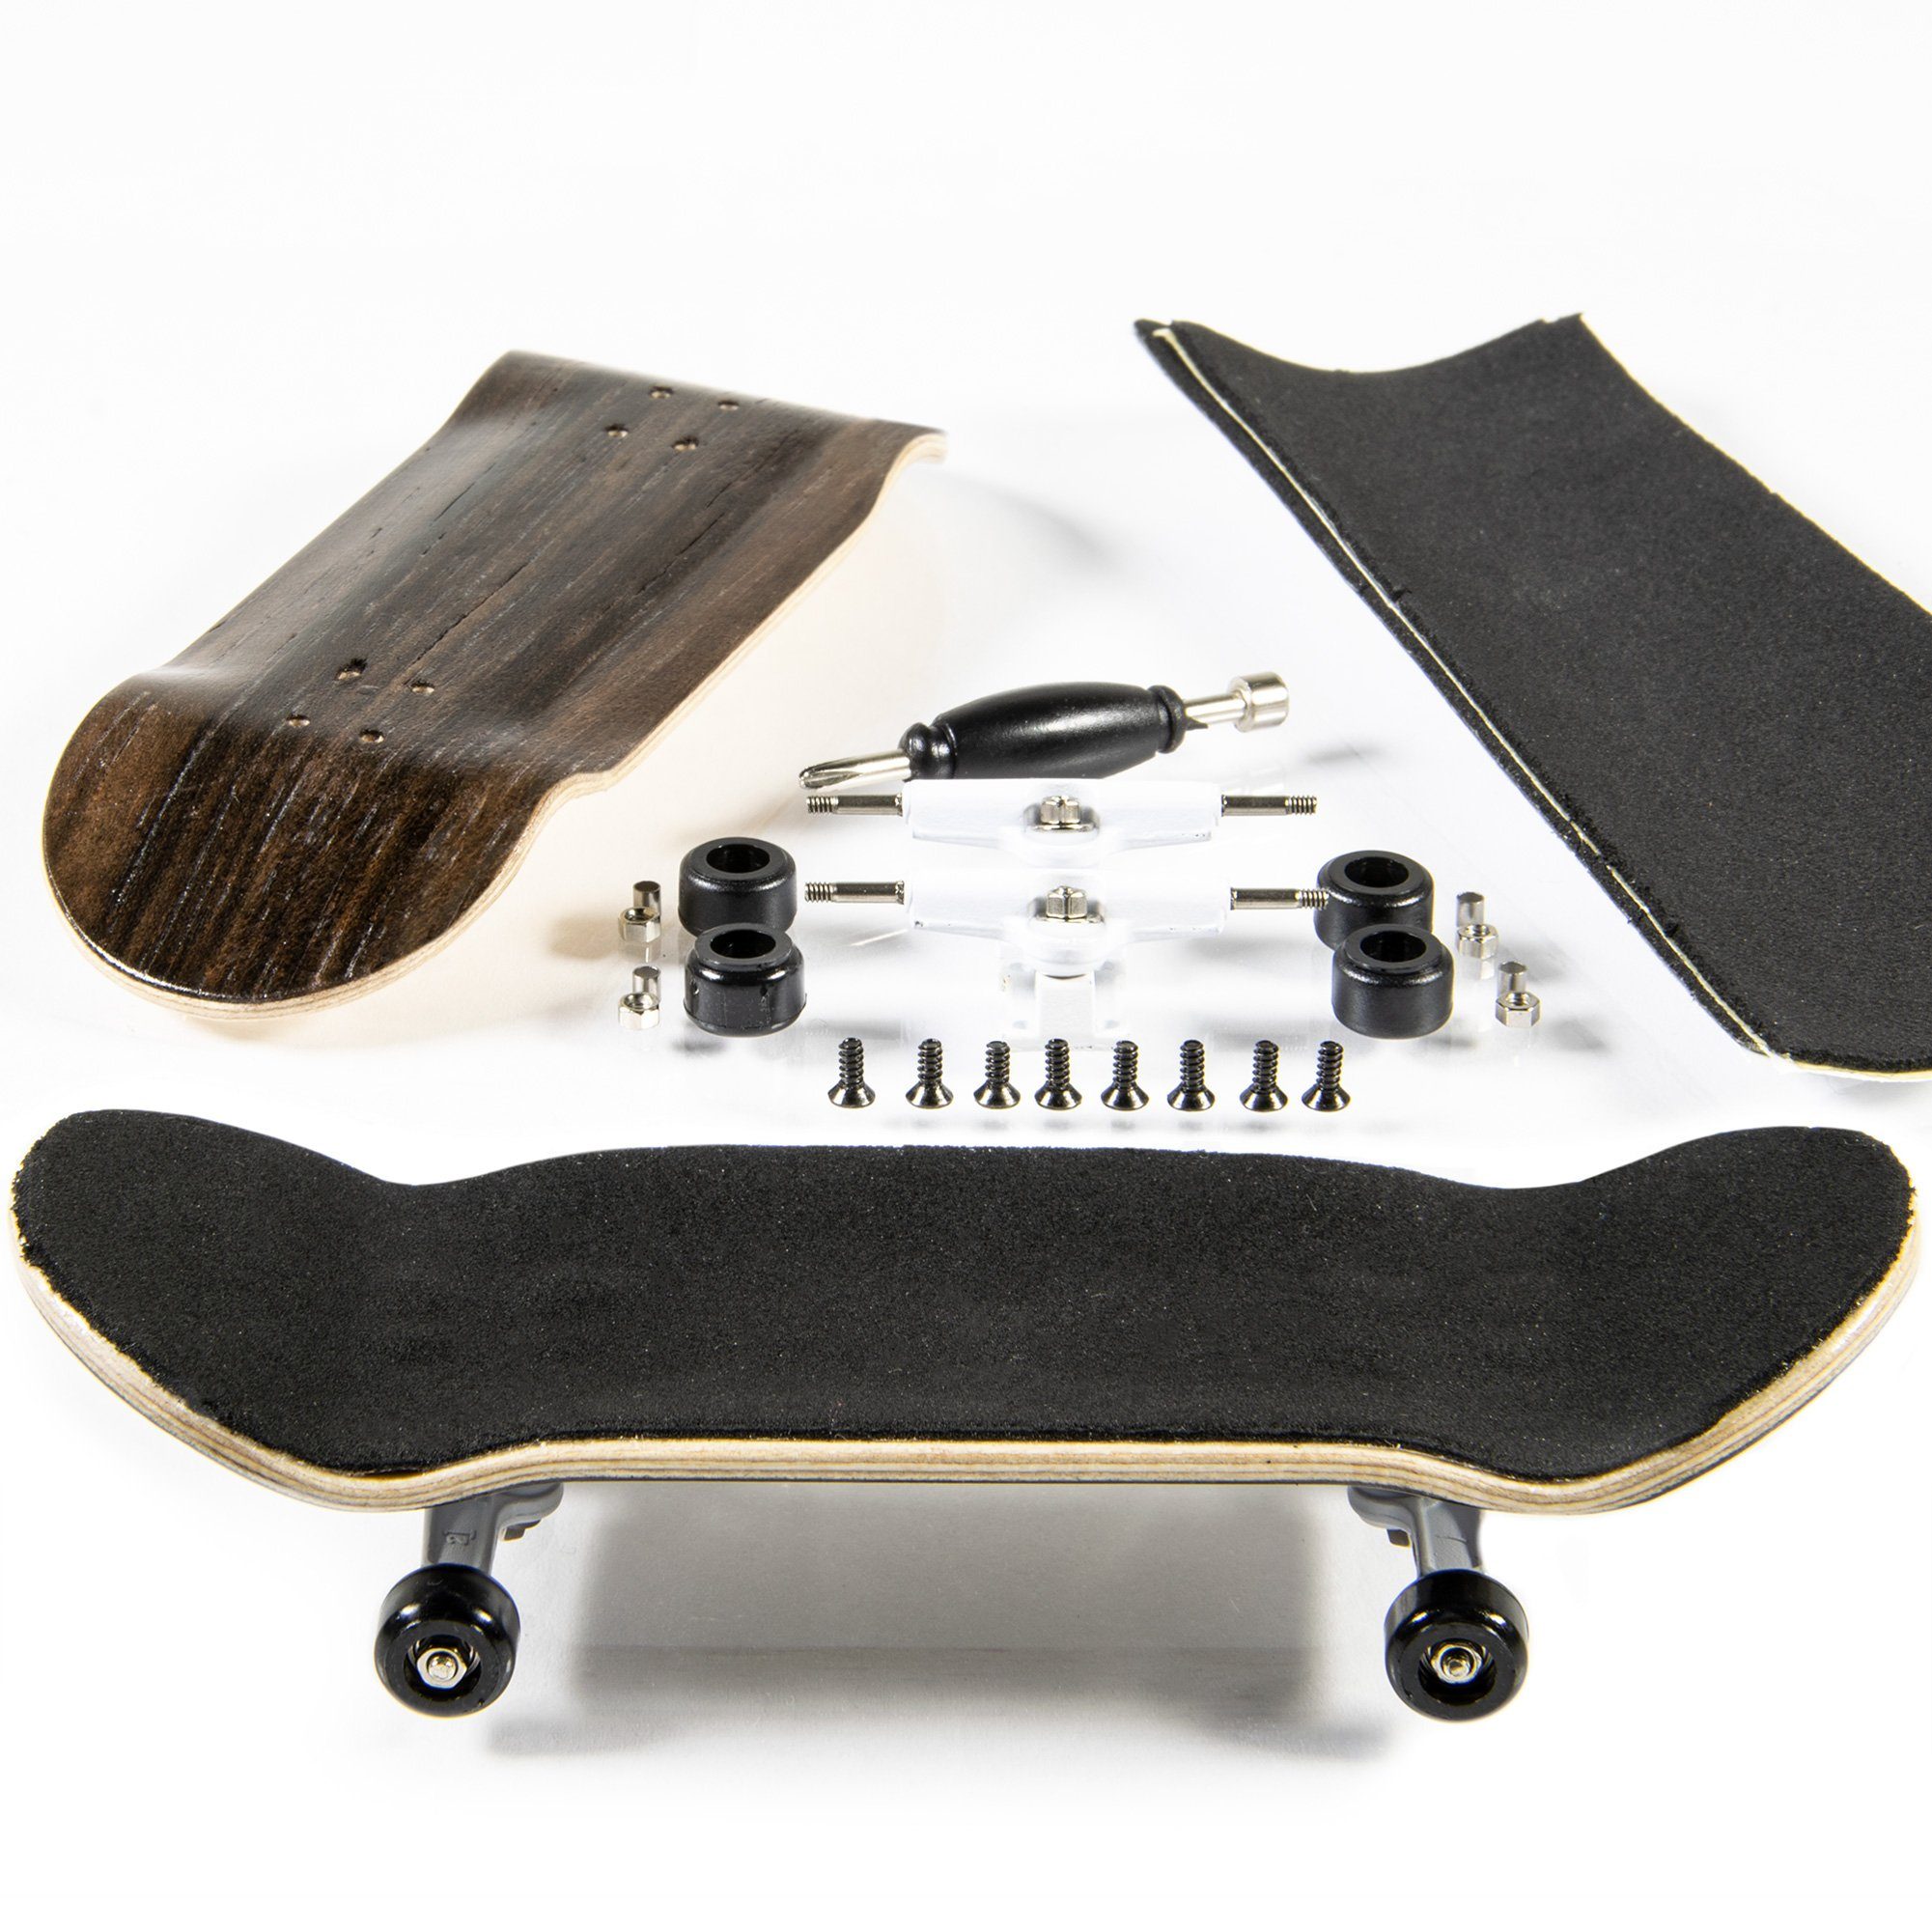 PhoneNatic Miniskateboard Finger-Skateboard Bau Set - Fingerboard - Griffbrett, Design 4 (Dunkelbraun)